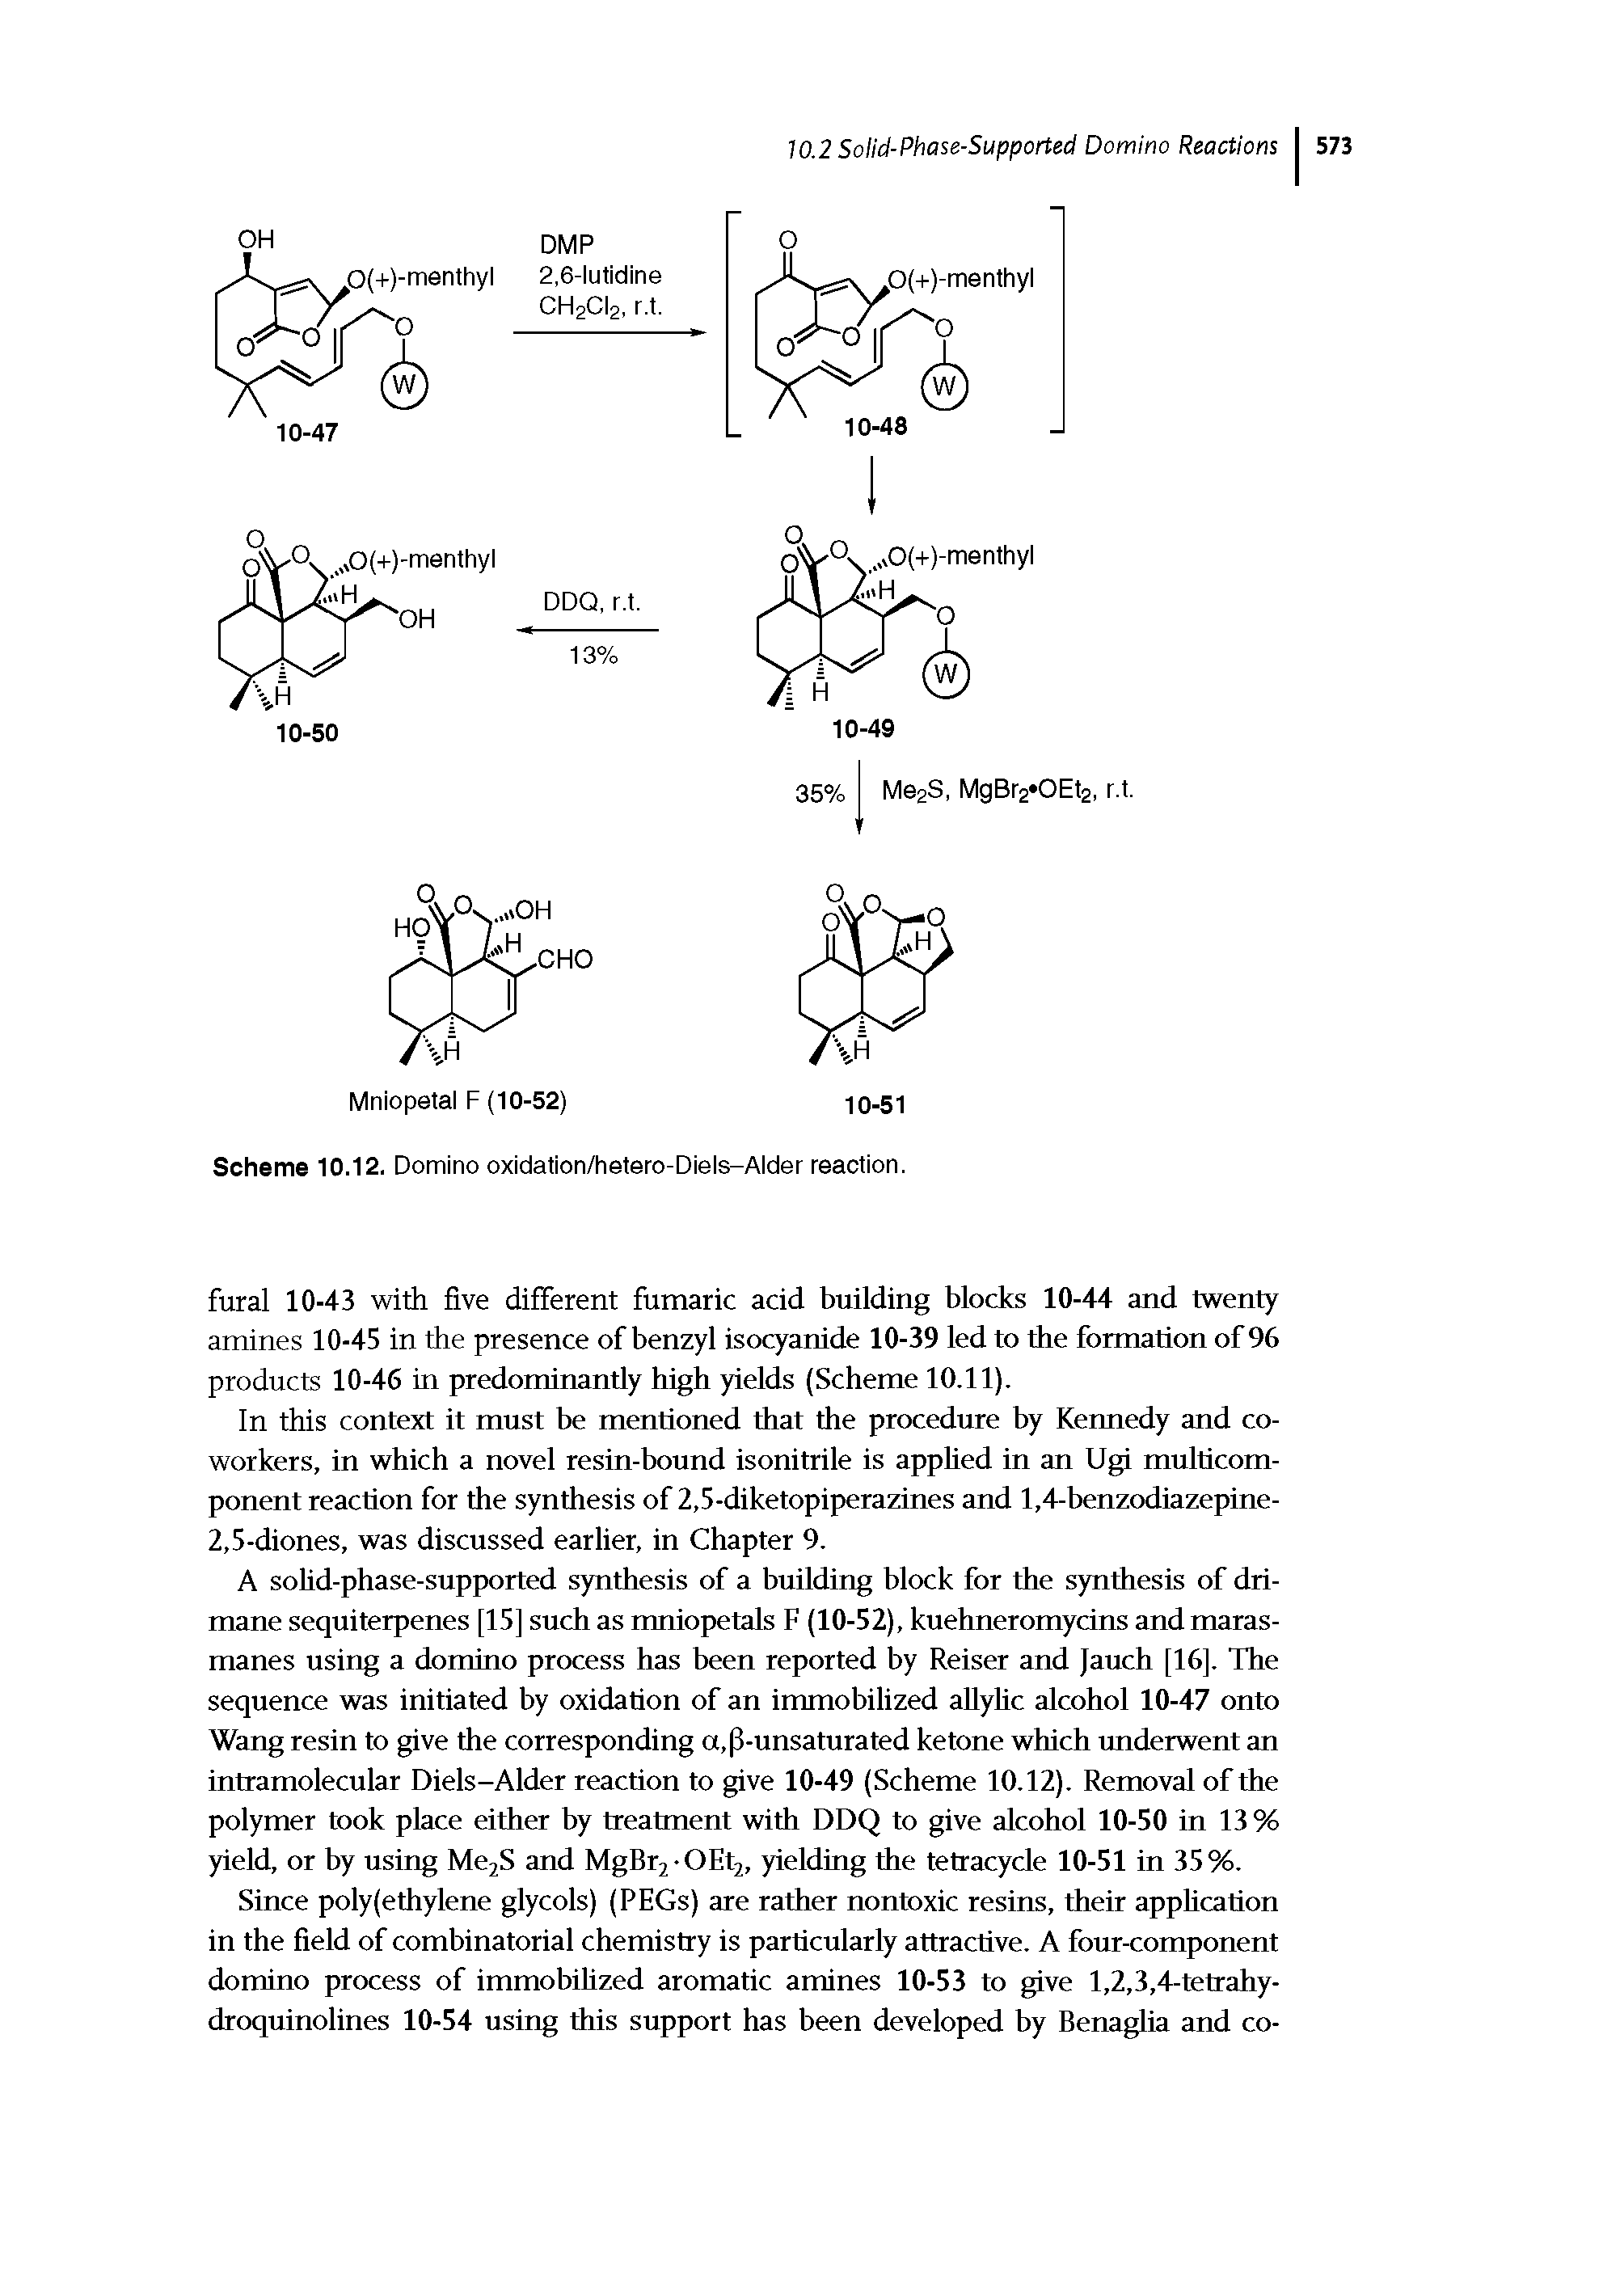 Scheme 10.12. Domino oxidation/hetero-Diels-Alder reaction.